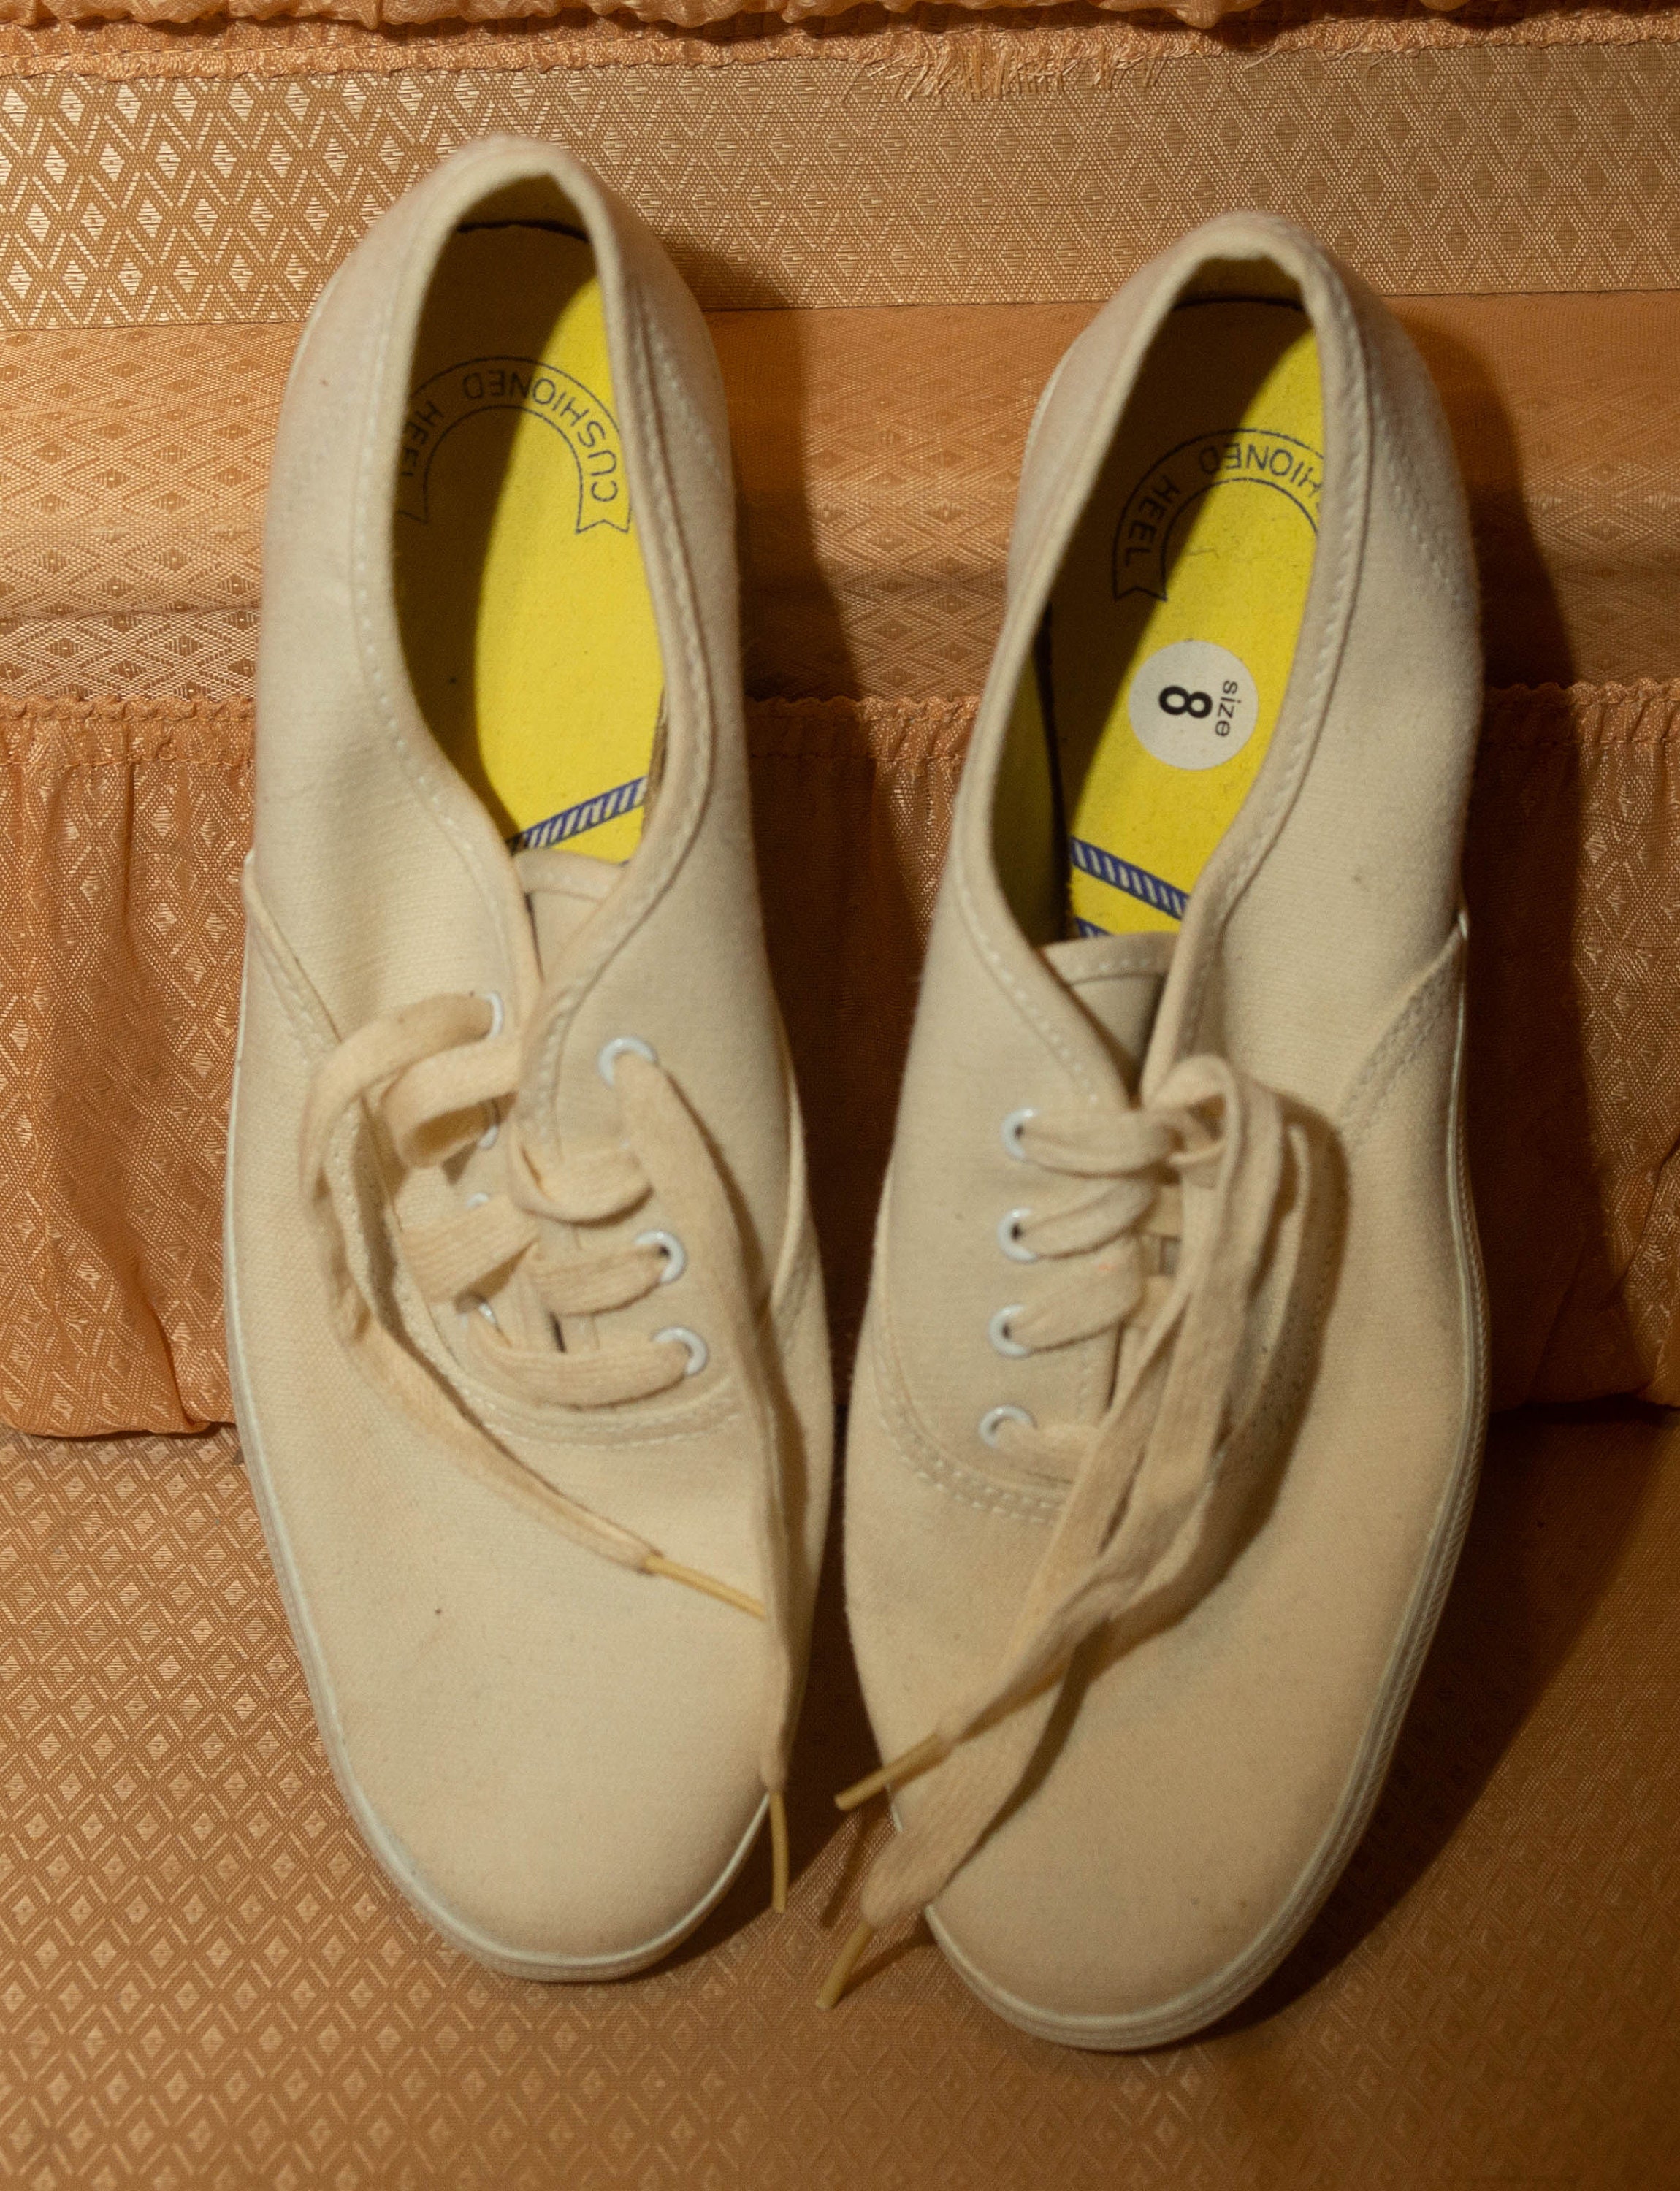 Vintage Keds Sneakers 70s Mod Canvas Shoes 8 - Etsy Hong Kong